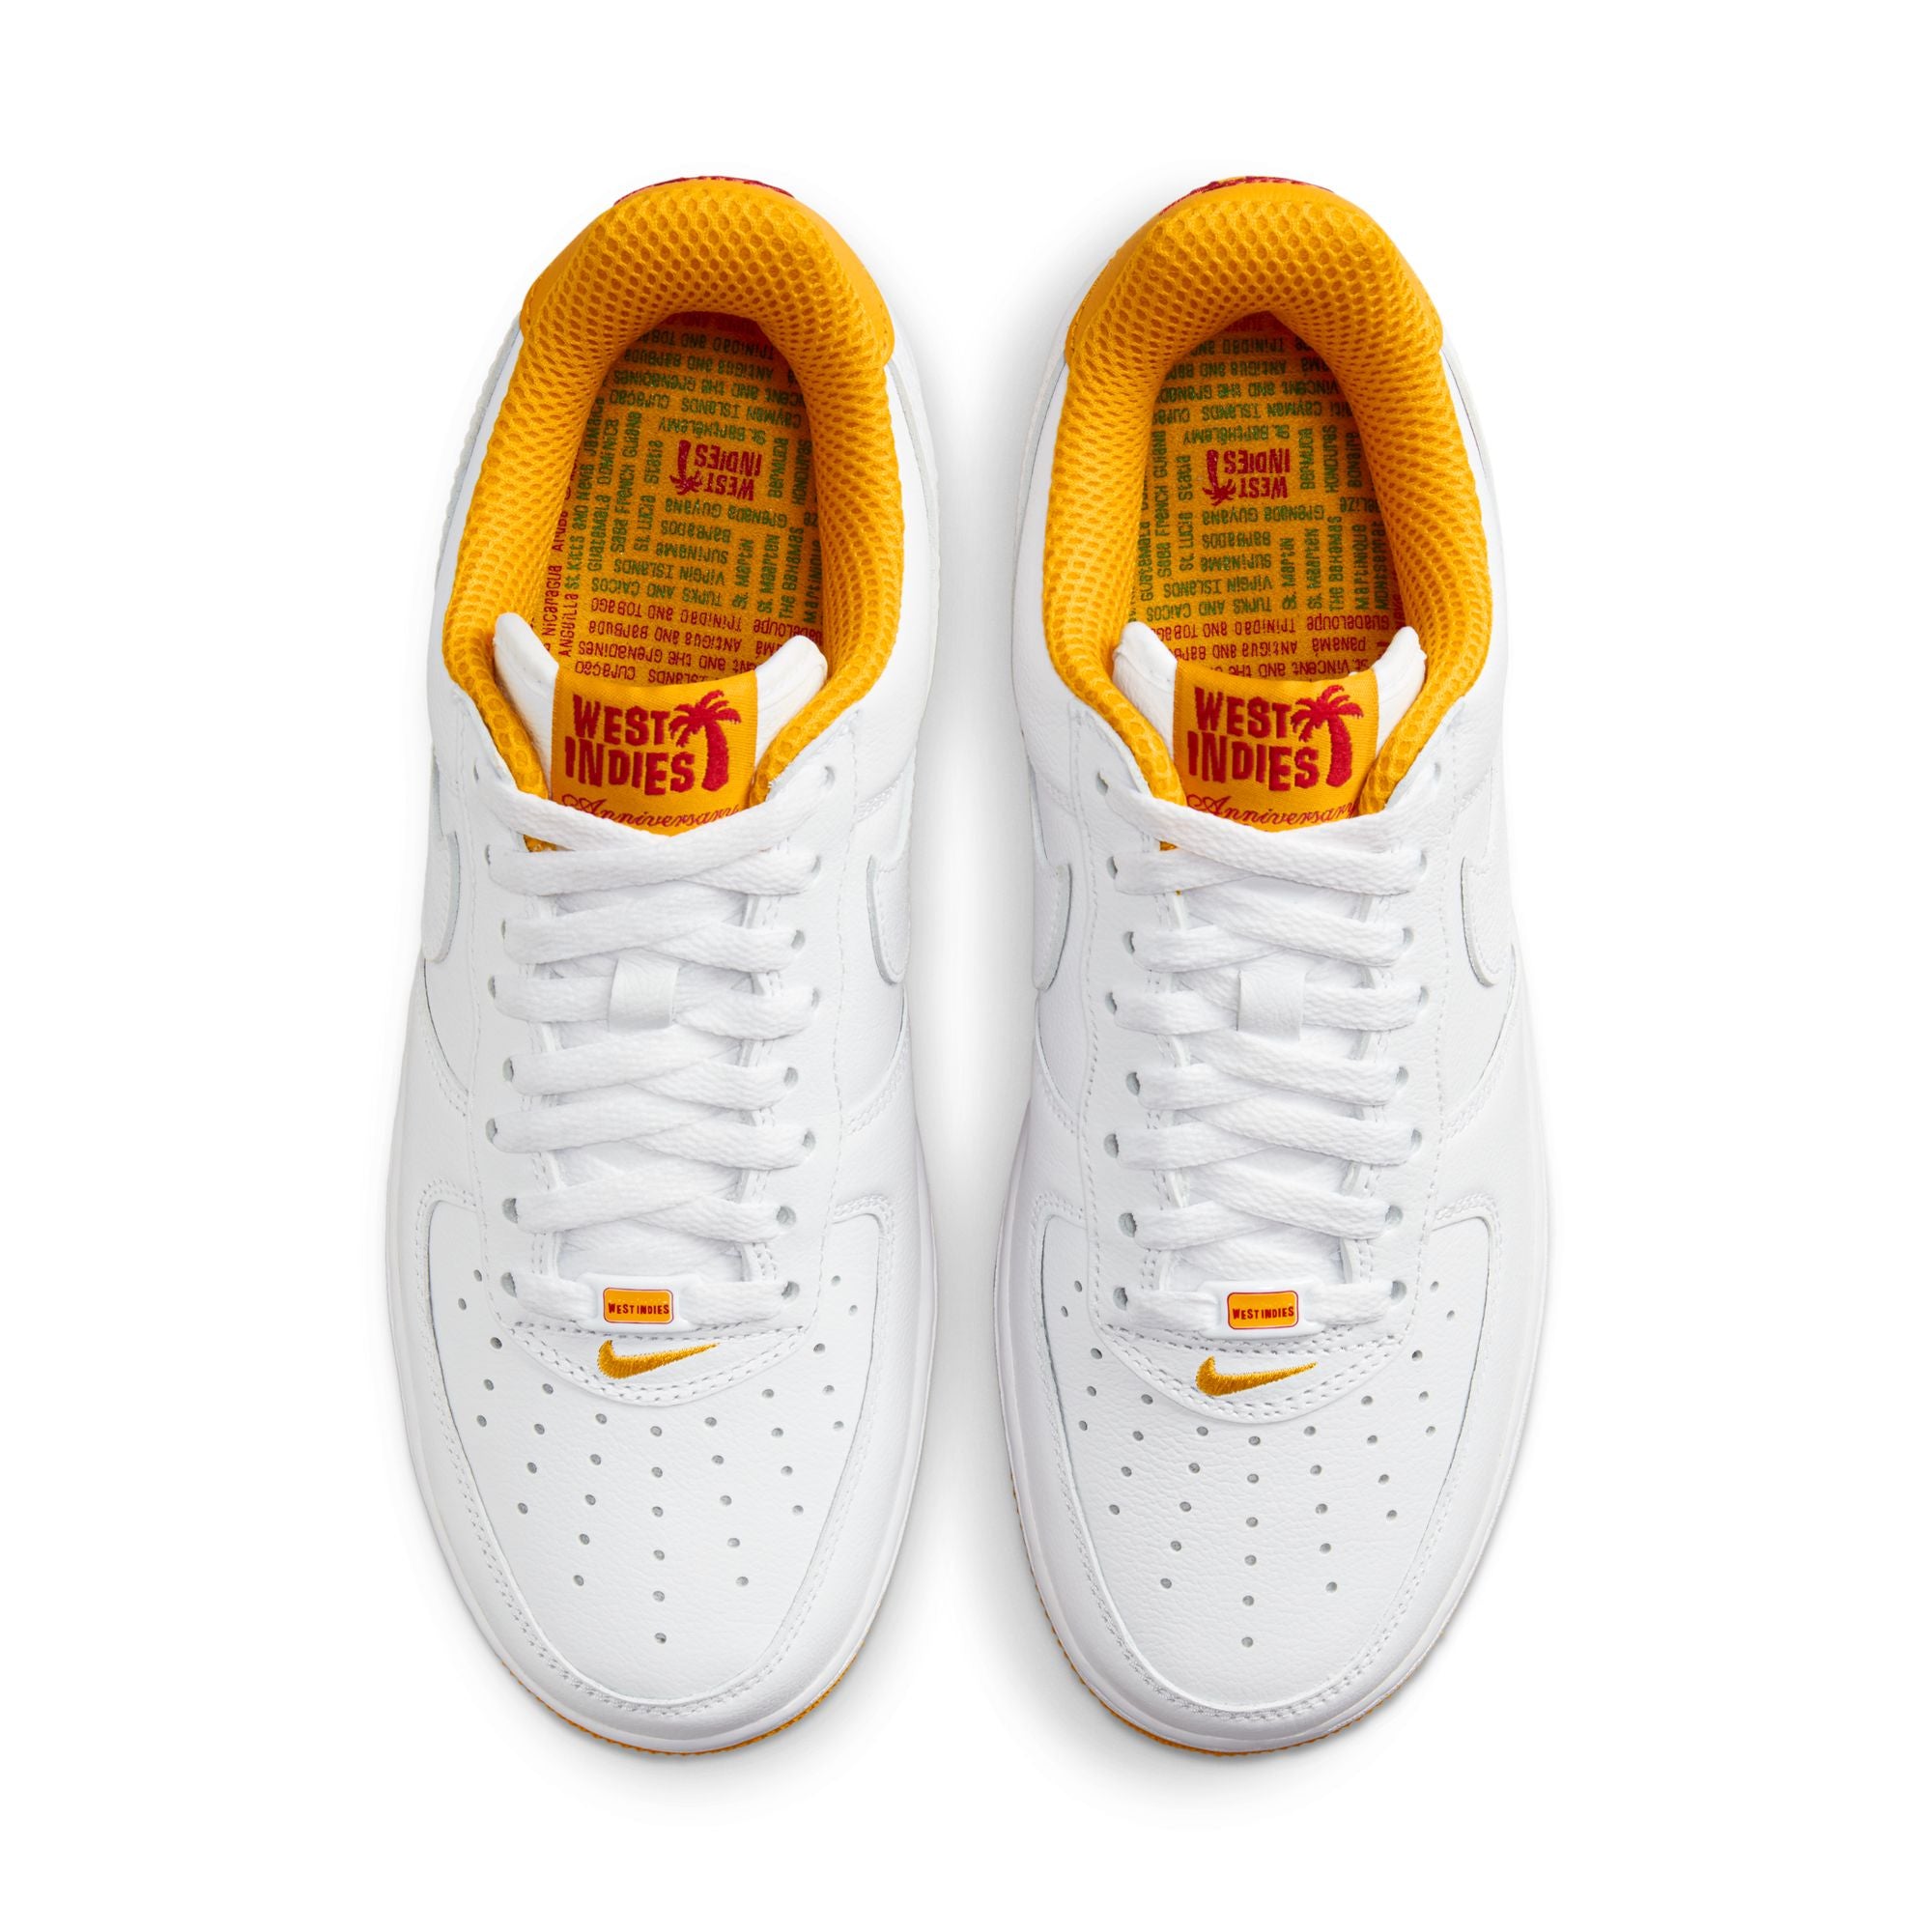 Men's shoes Nike SF Air Force 1 Laser Orange/ Black-White